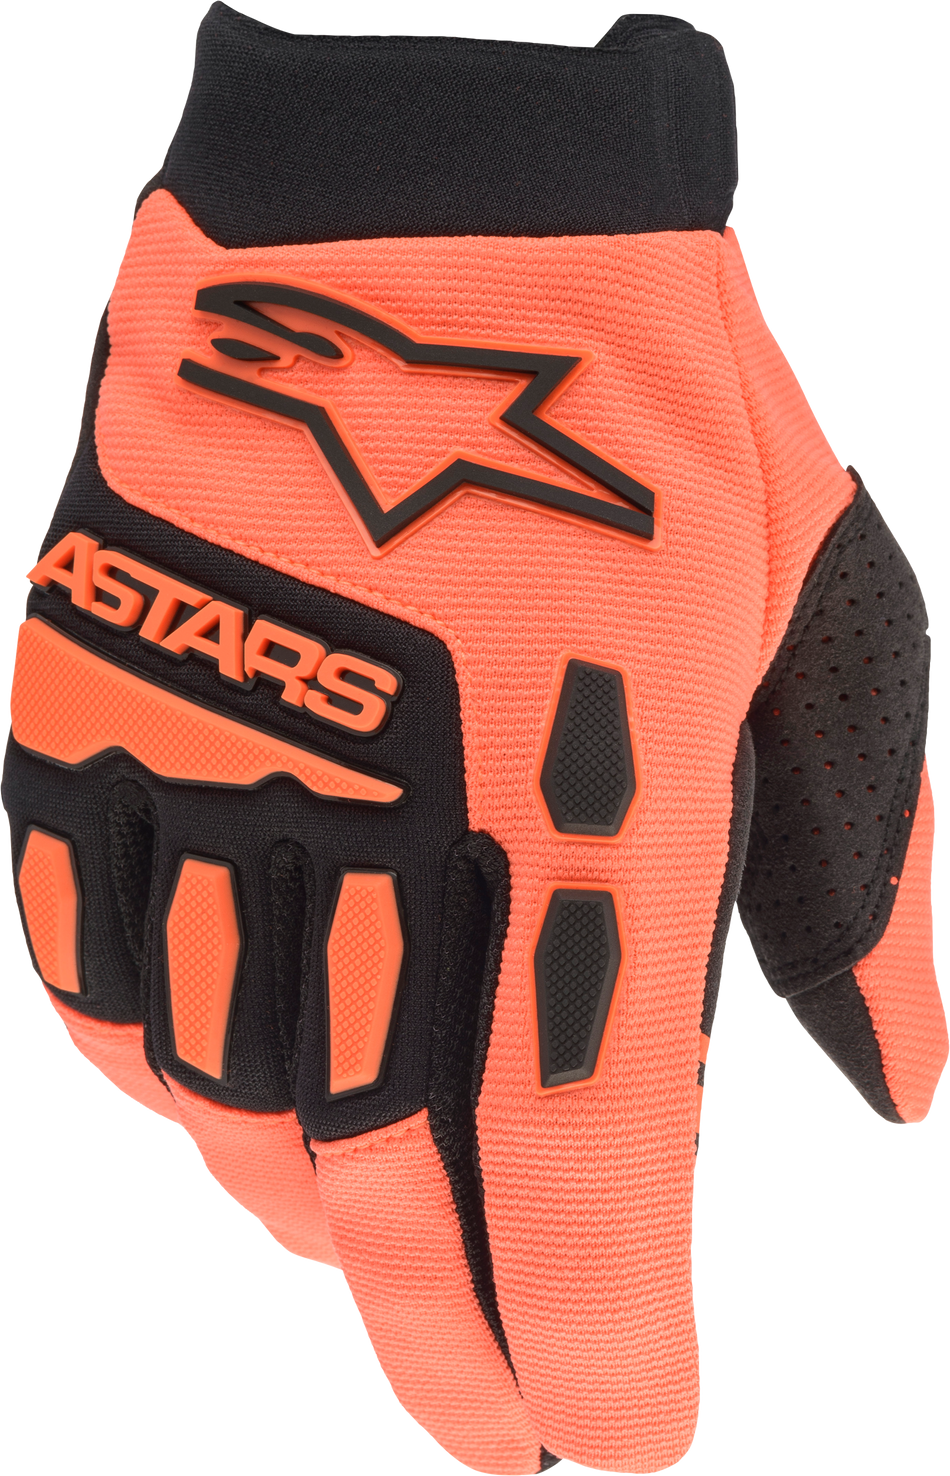 ALPINESTARS Youth & Kids Full Bore Gloves Orange/Black Yxs 3543622-41-XS